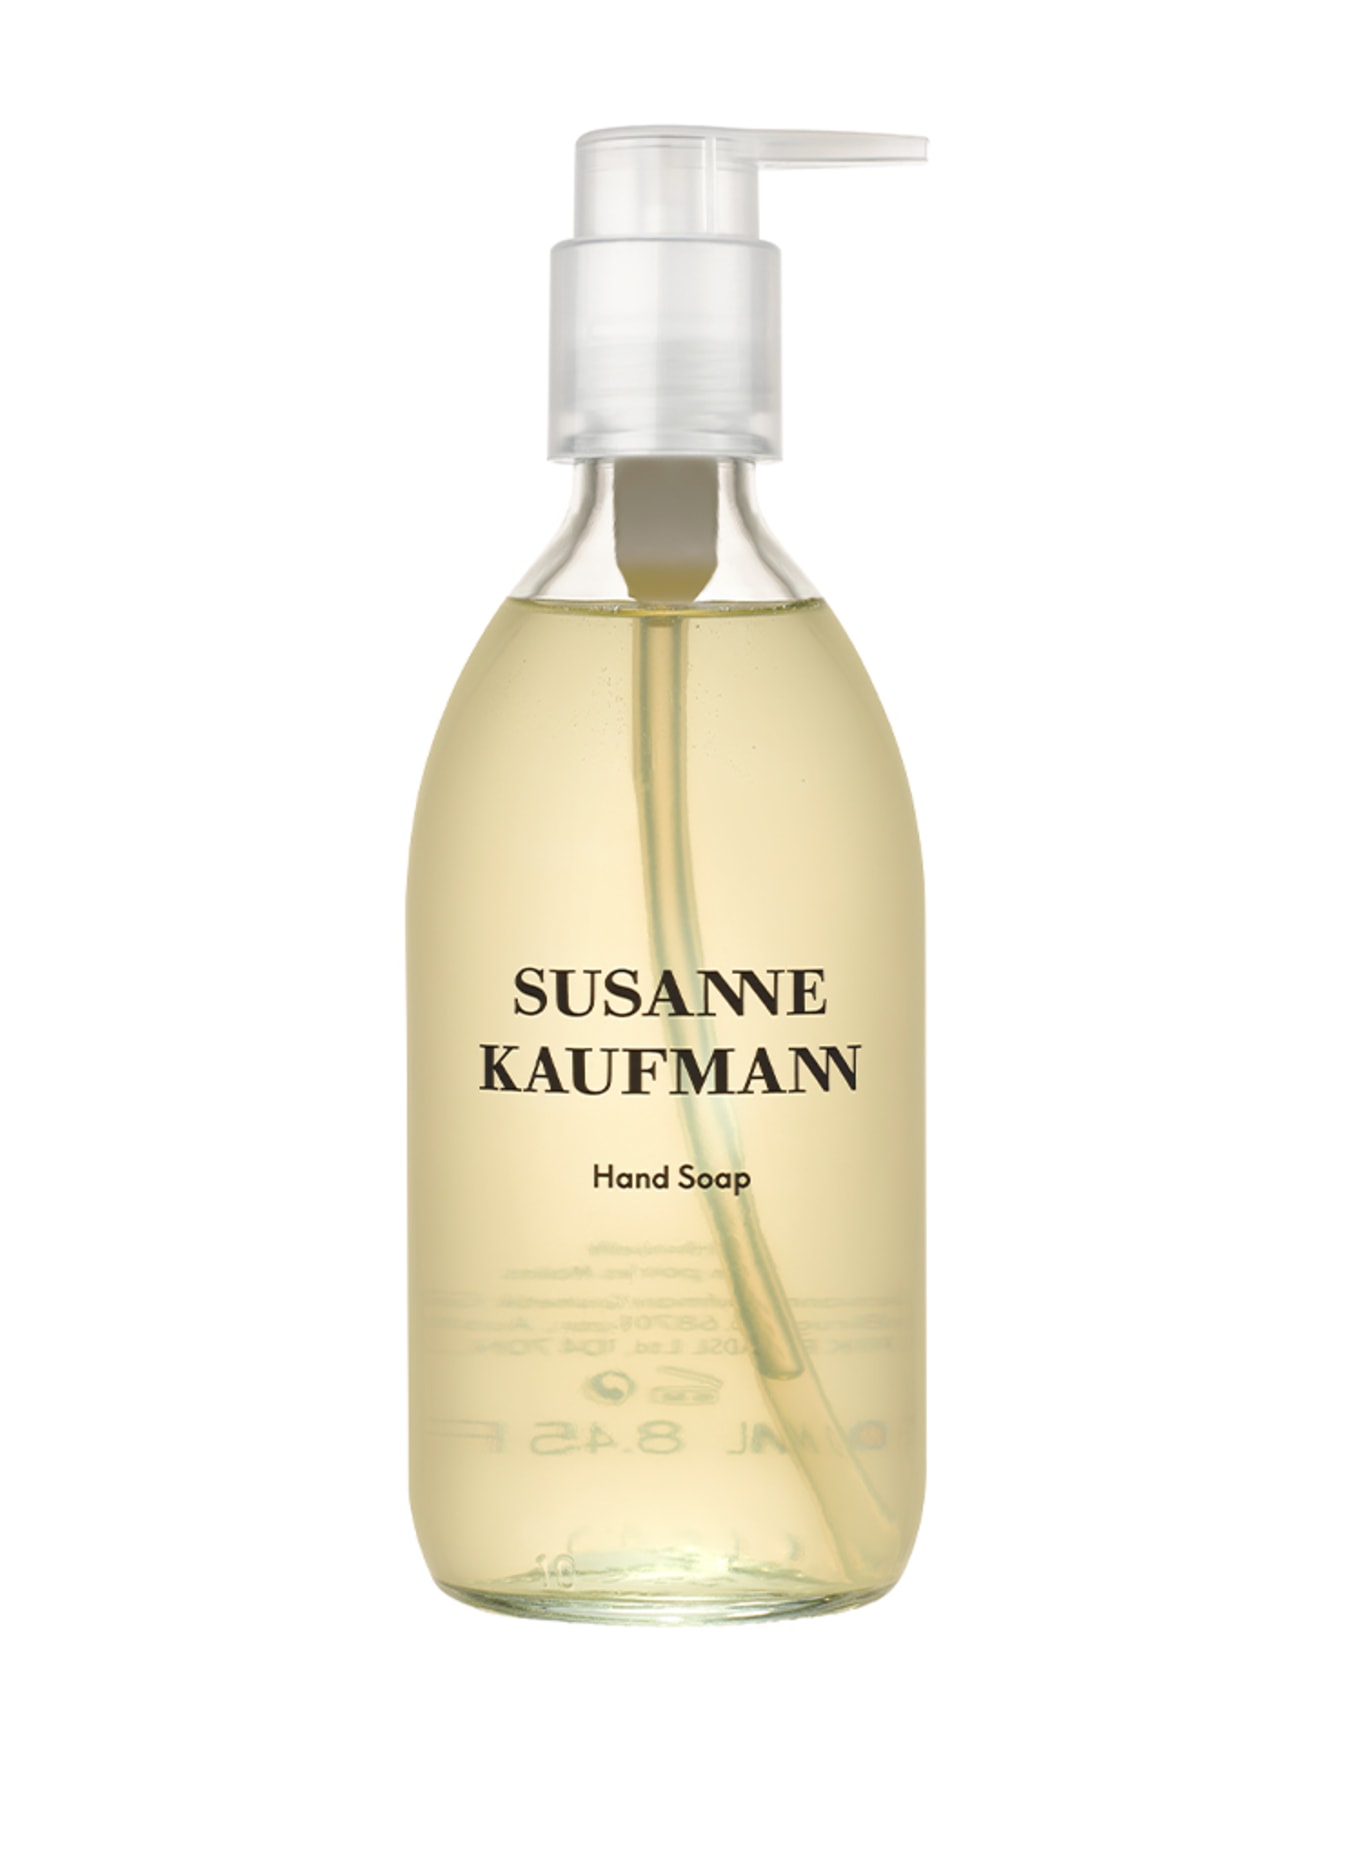 SUSANNE KAUFMANN HAND SOAP (Bild 1)